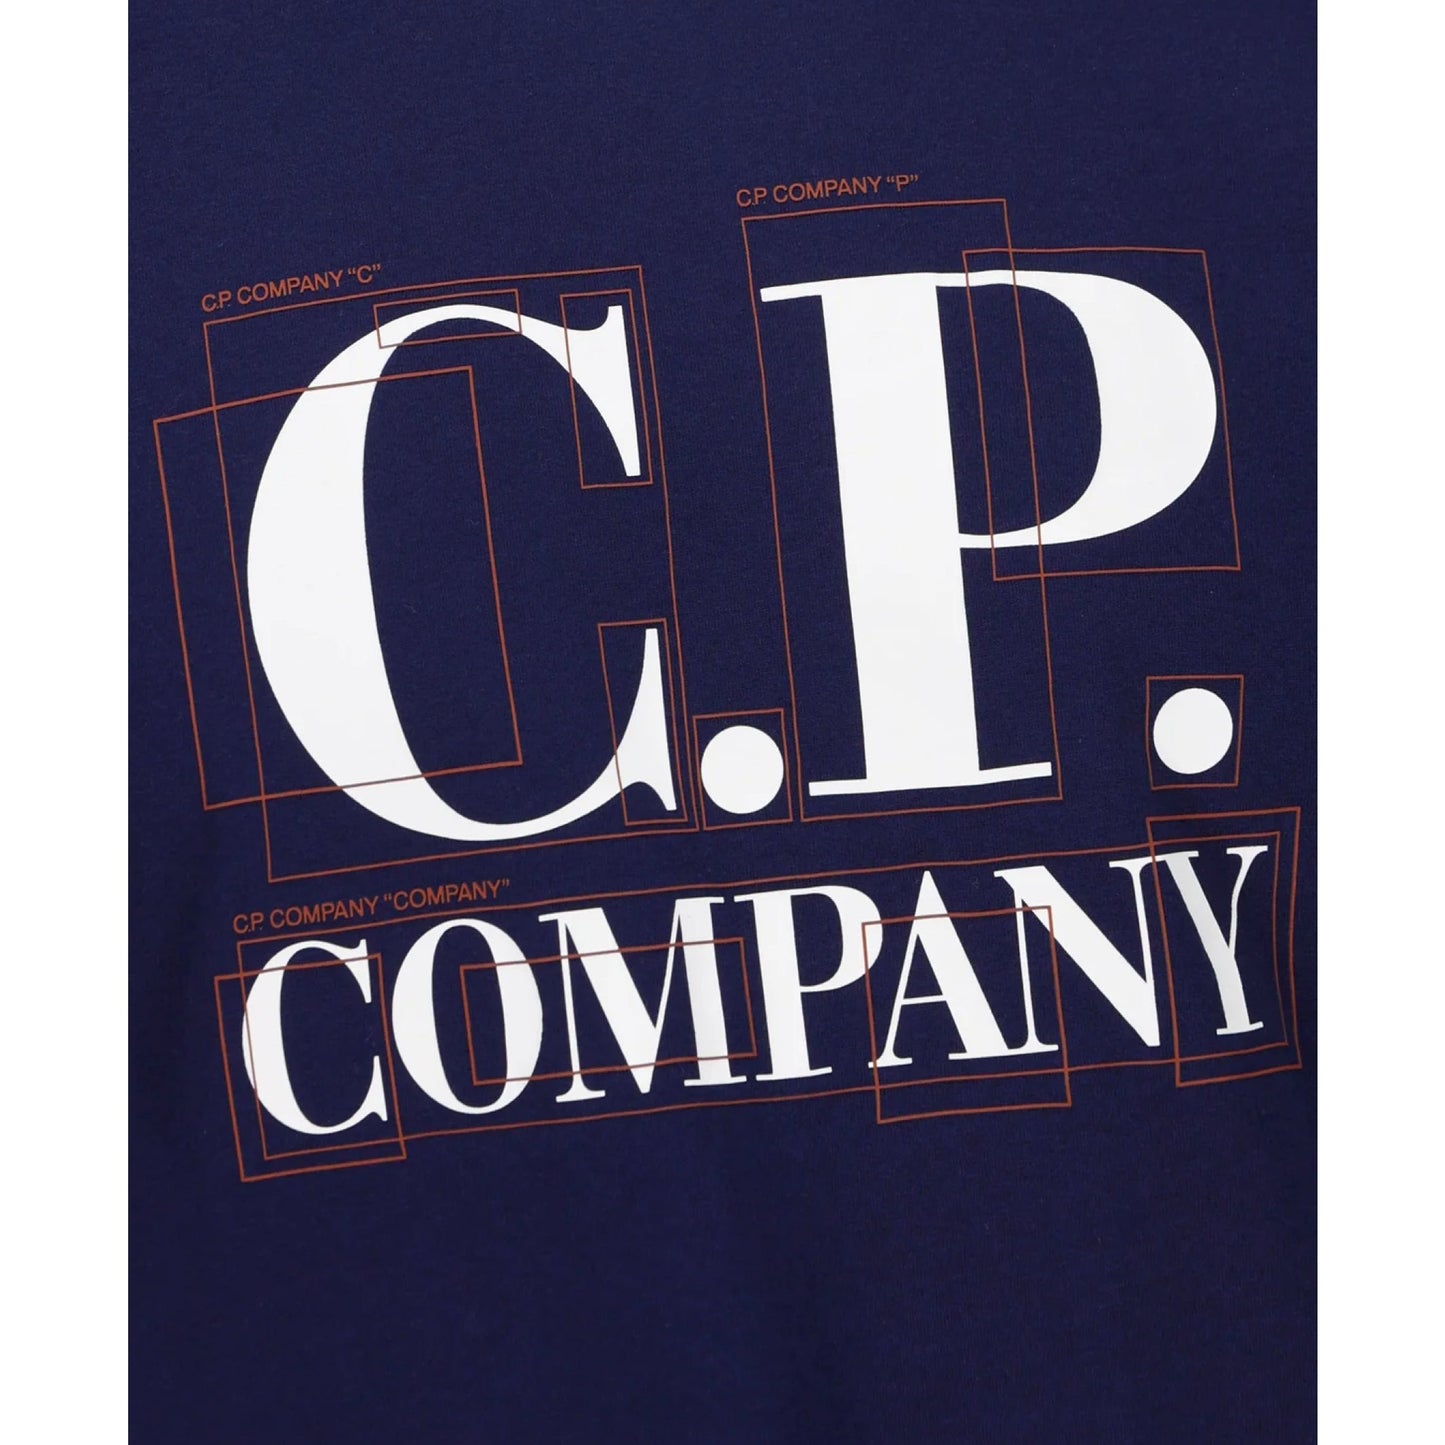 CP Company 14CMTS189A T-Shirt - 868 Madivl Bl - Escape Menswear